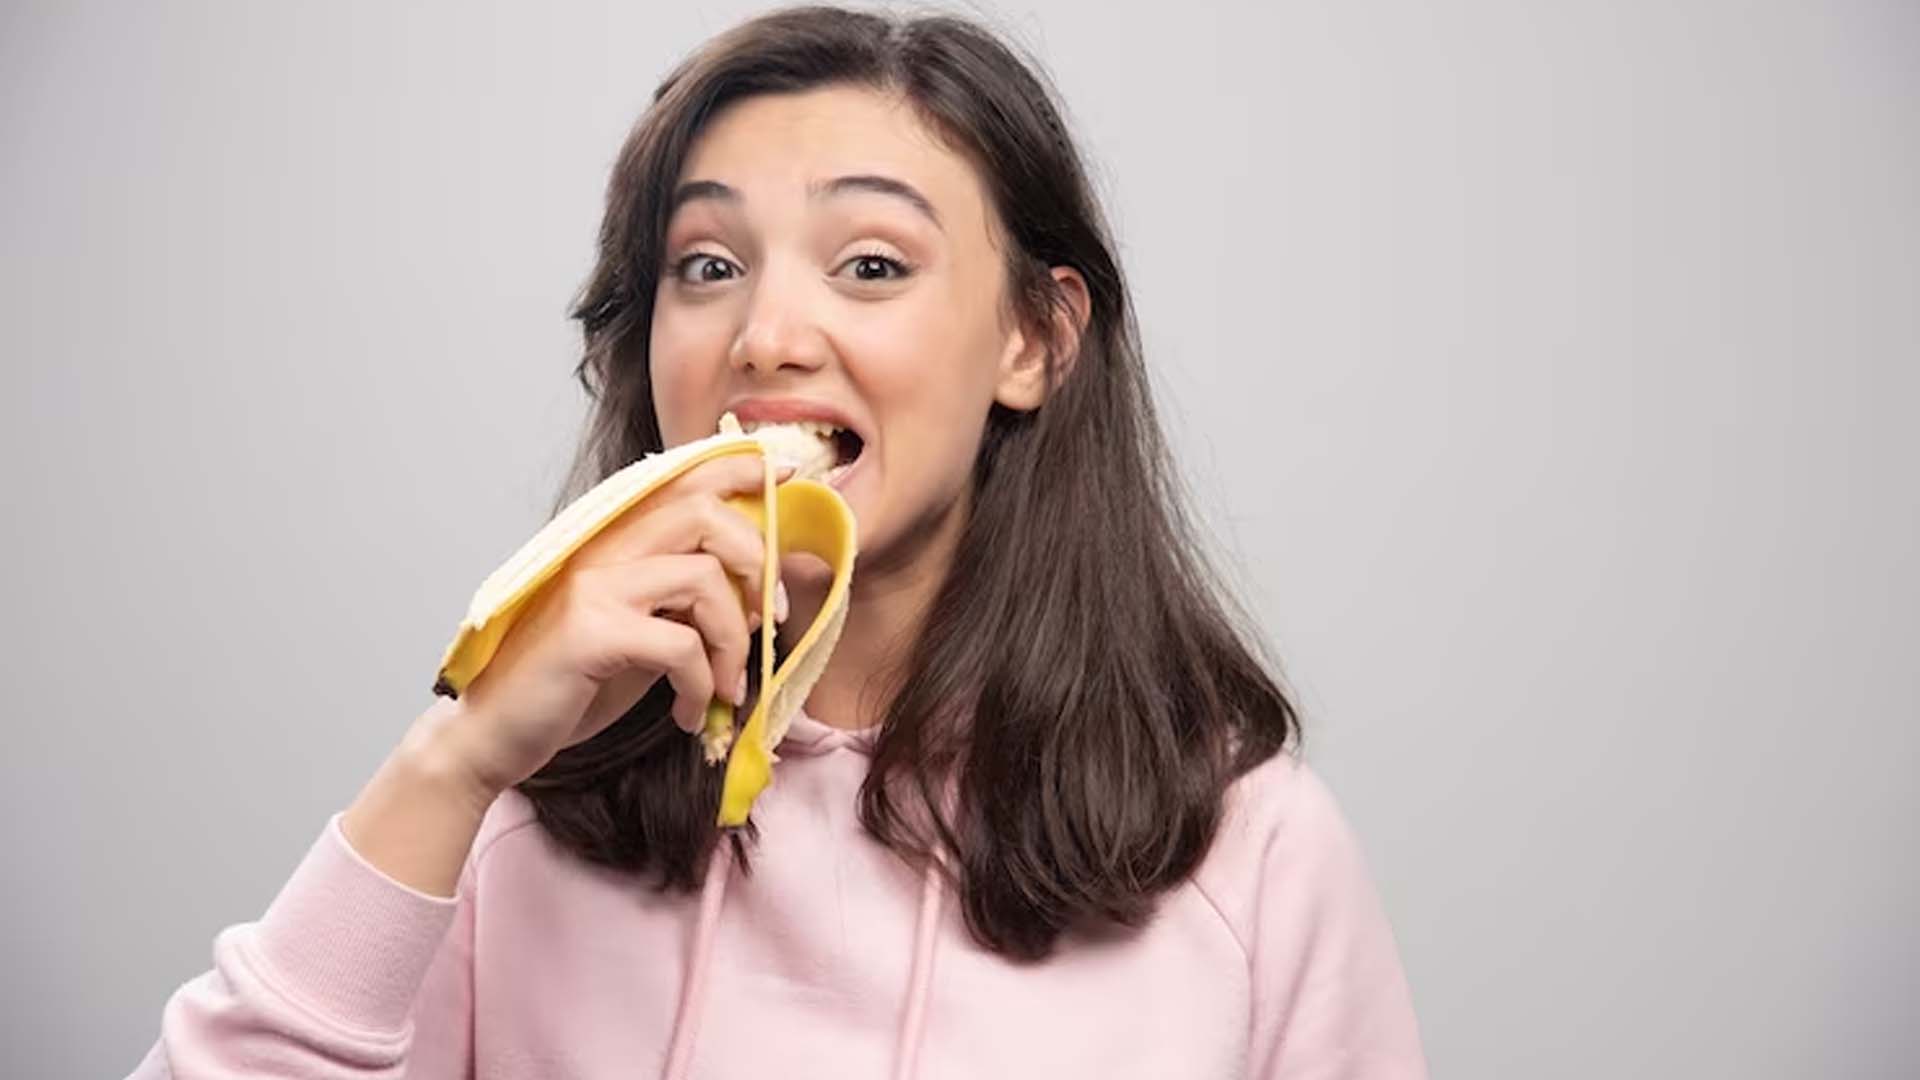 Health Benefits of Eating Bananas